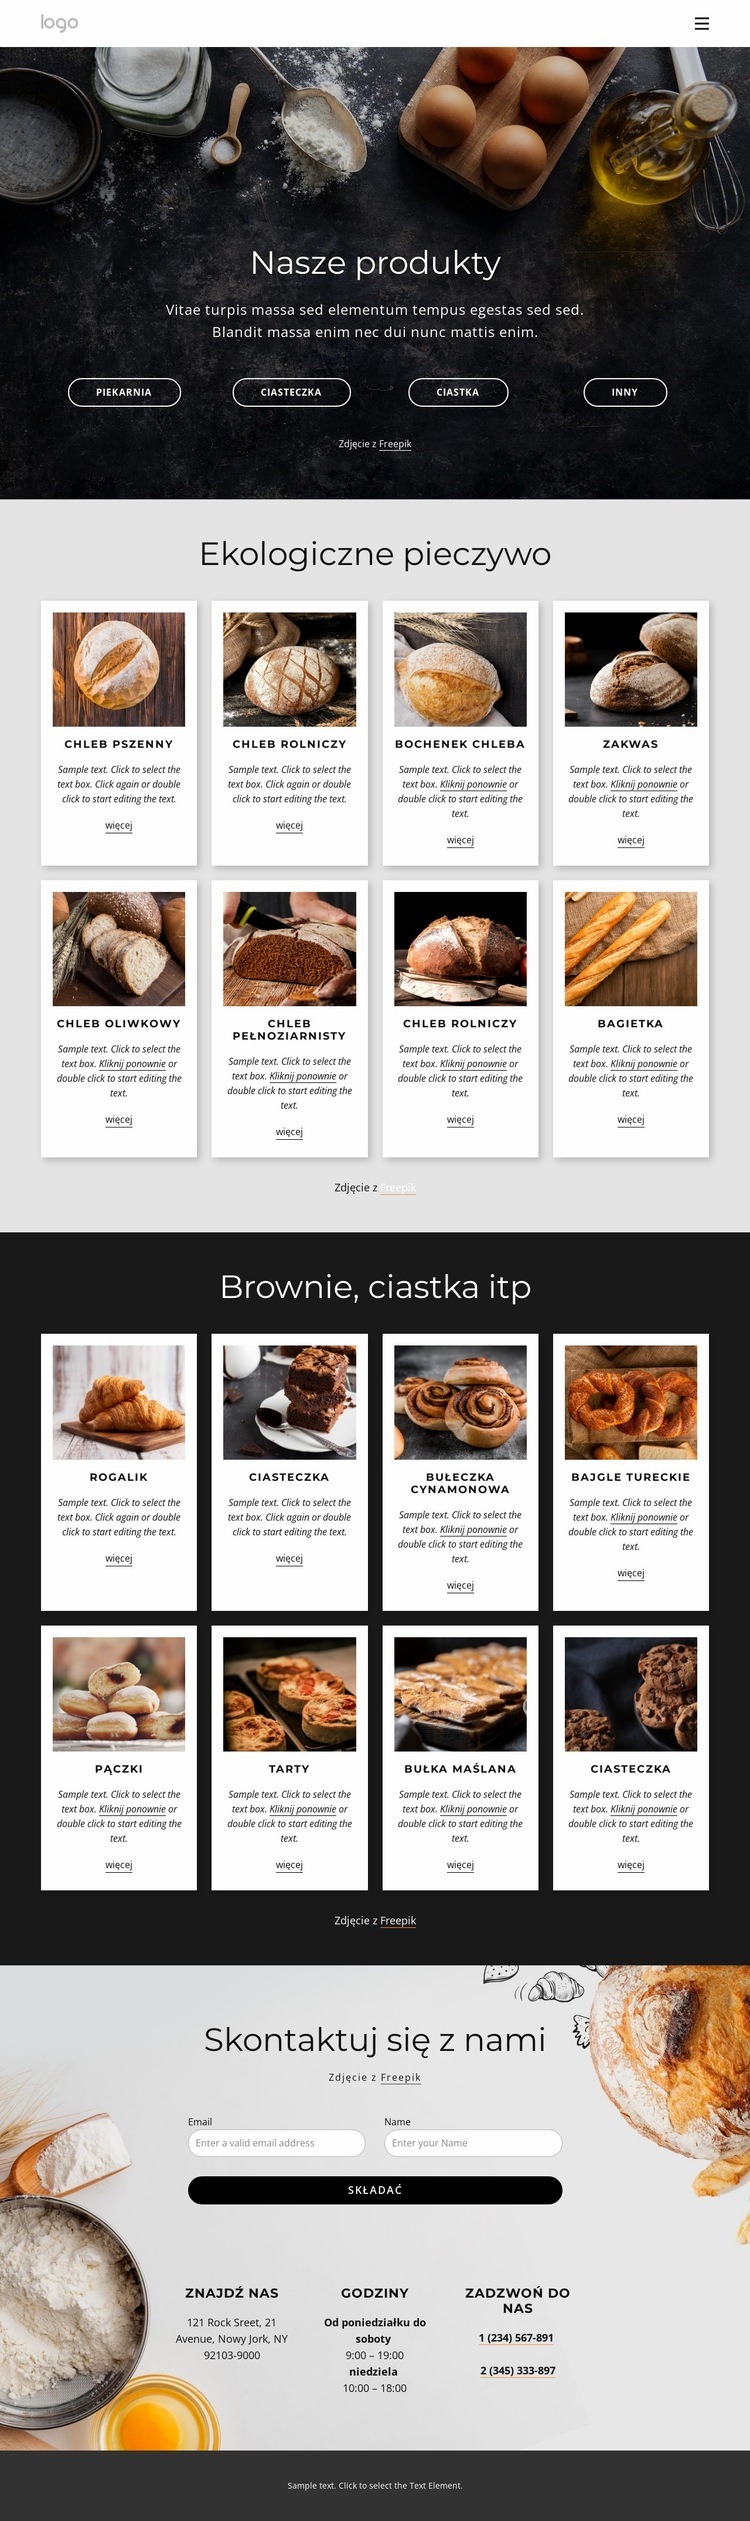 Menu chleba ekologicznego Szablon HTML5